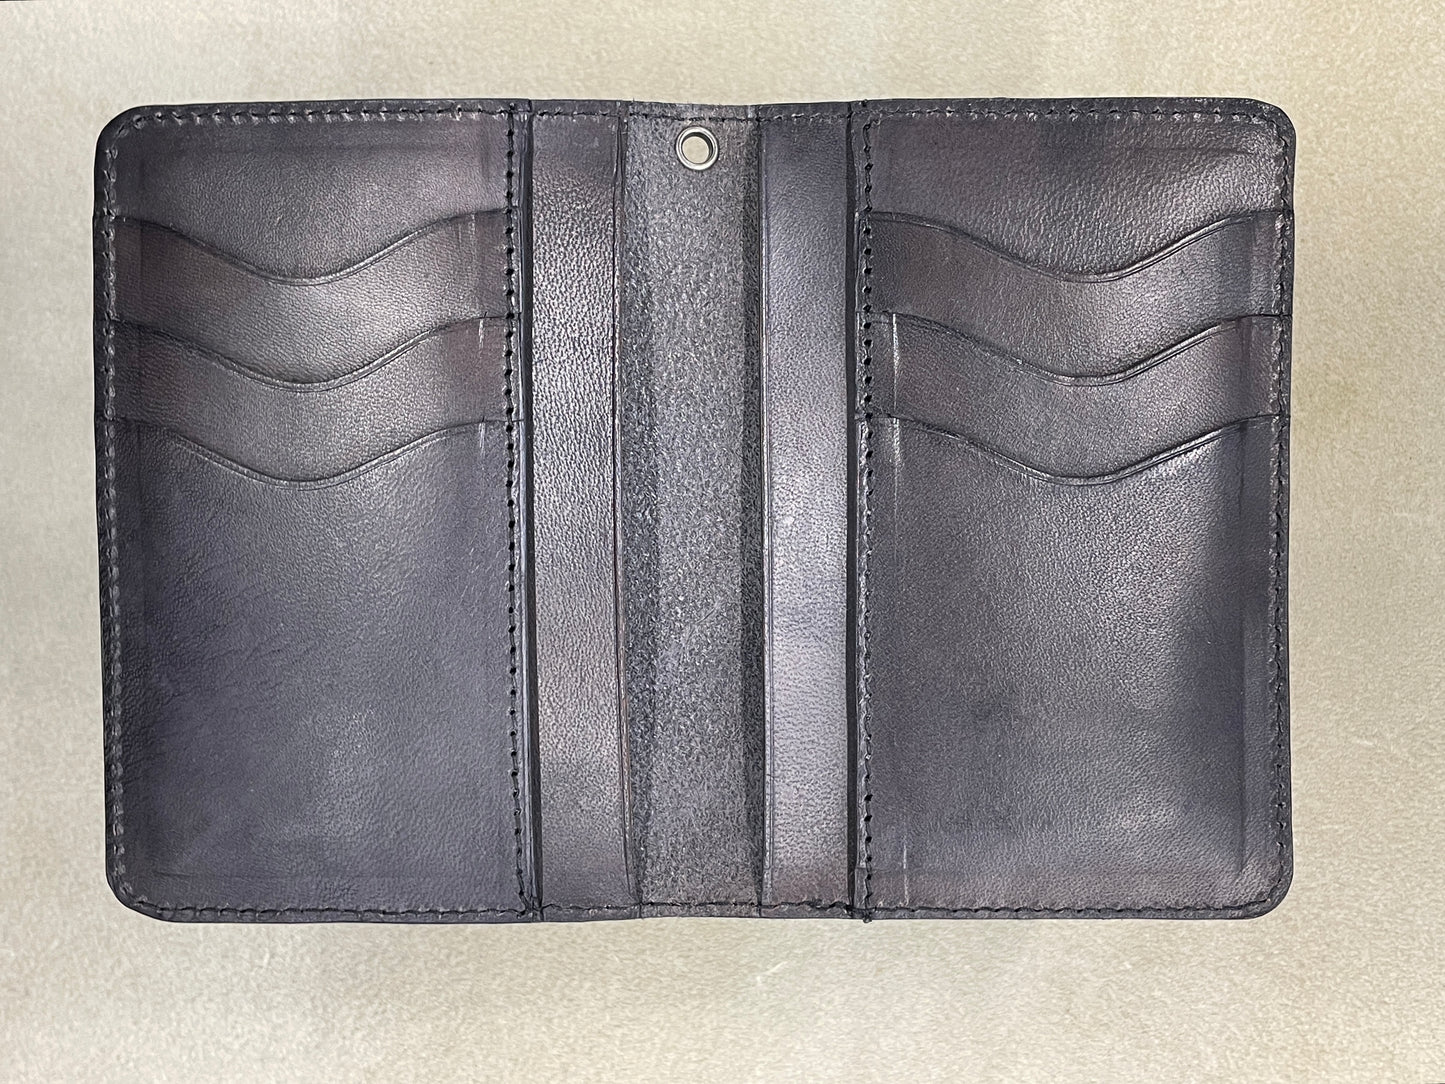 Wunderteam Leather Wallet